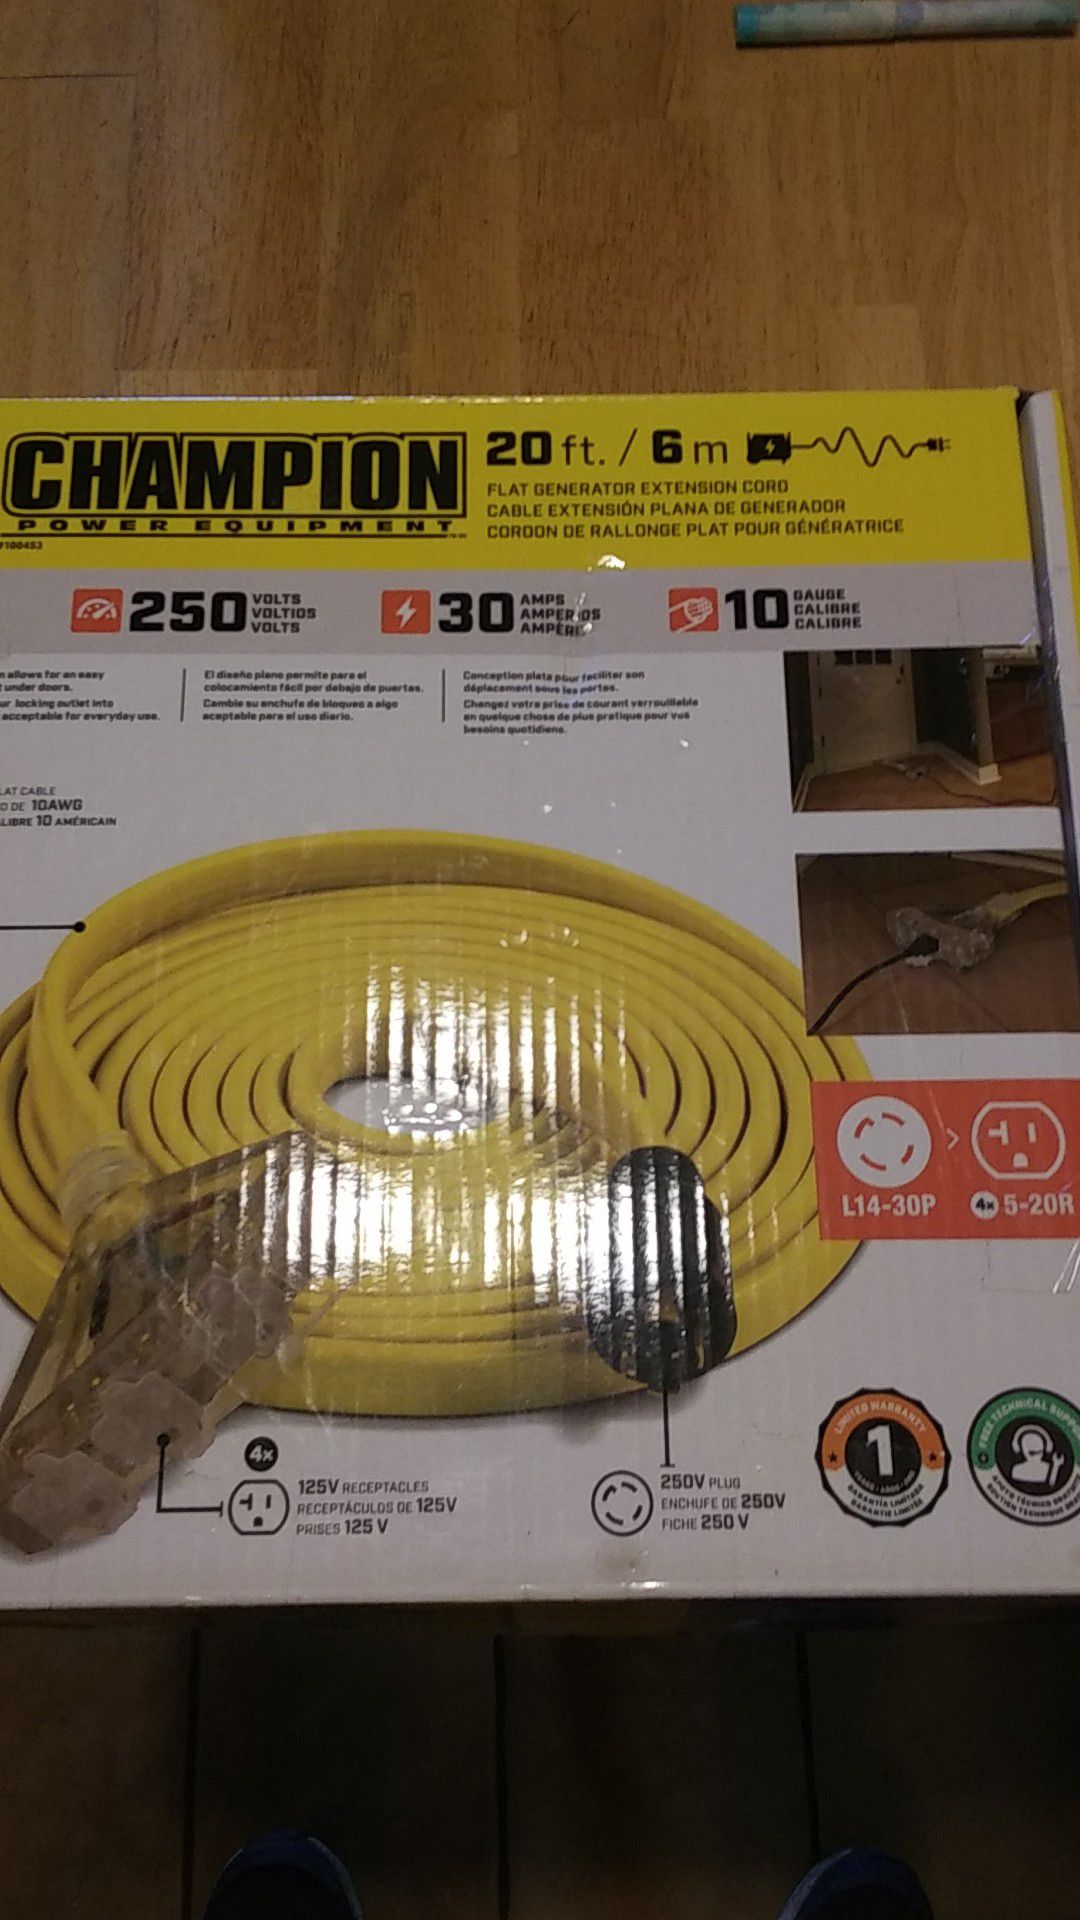 Champion flat generator cord